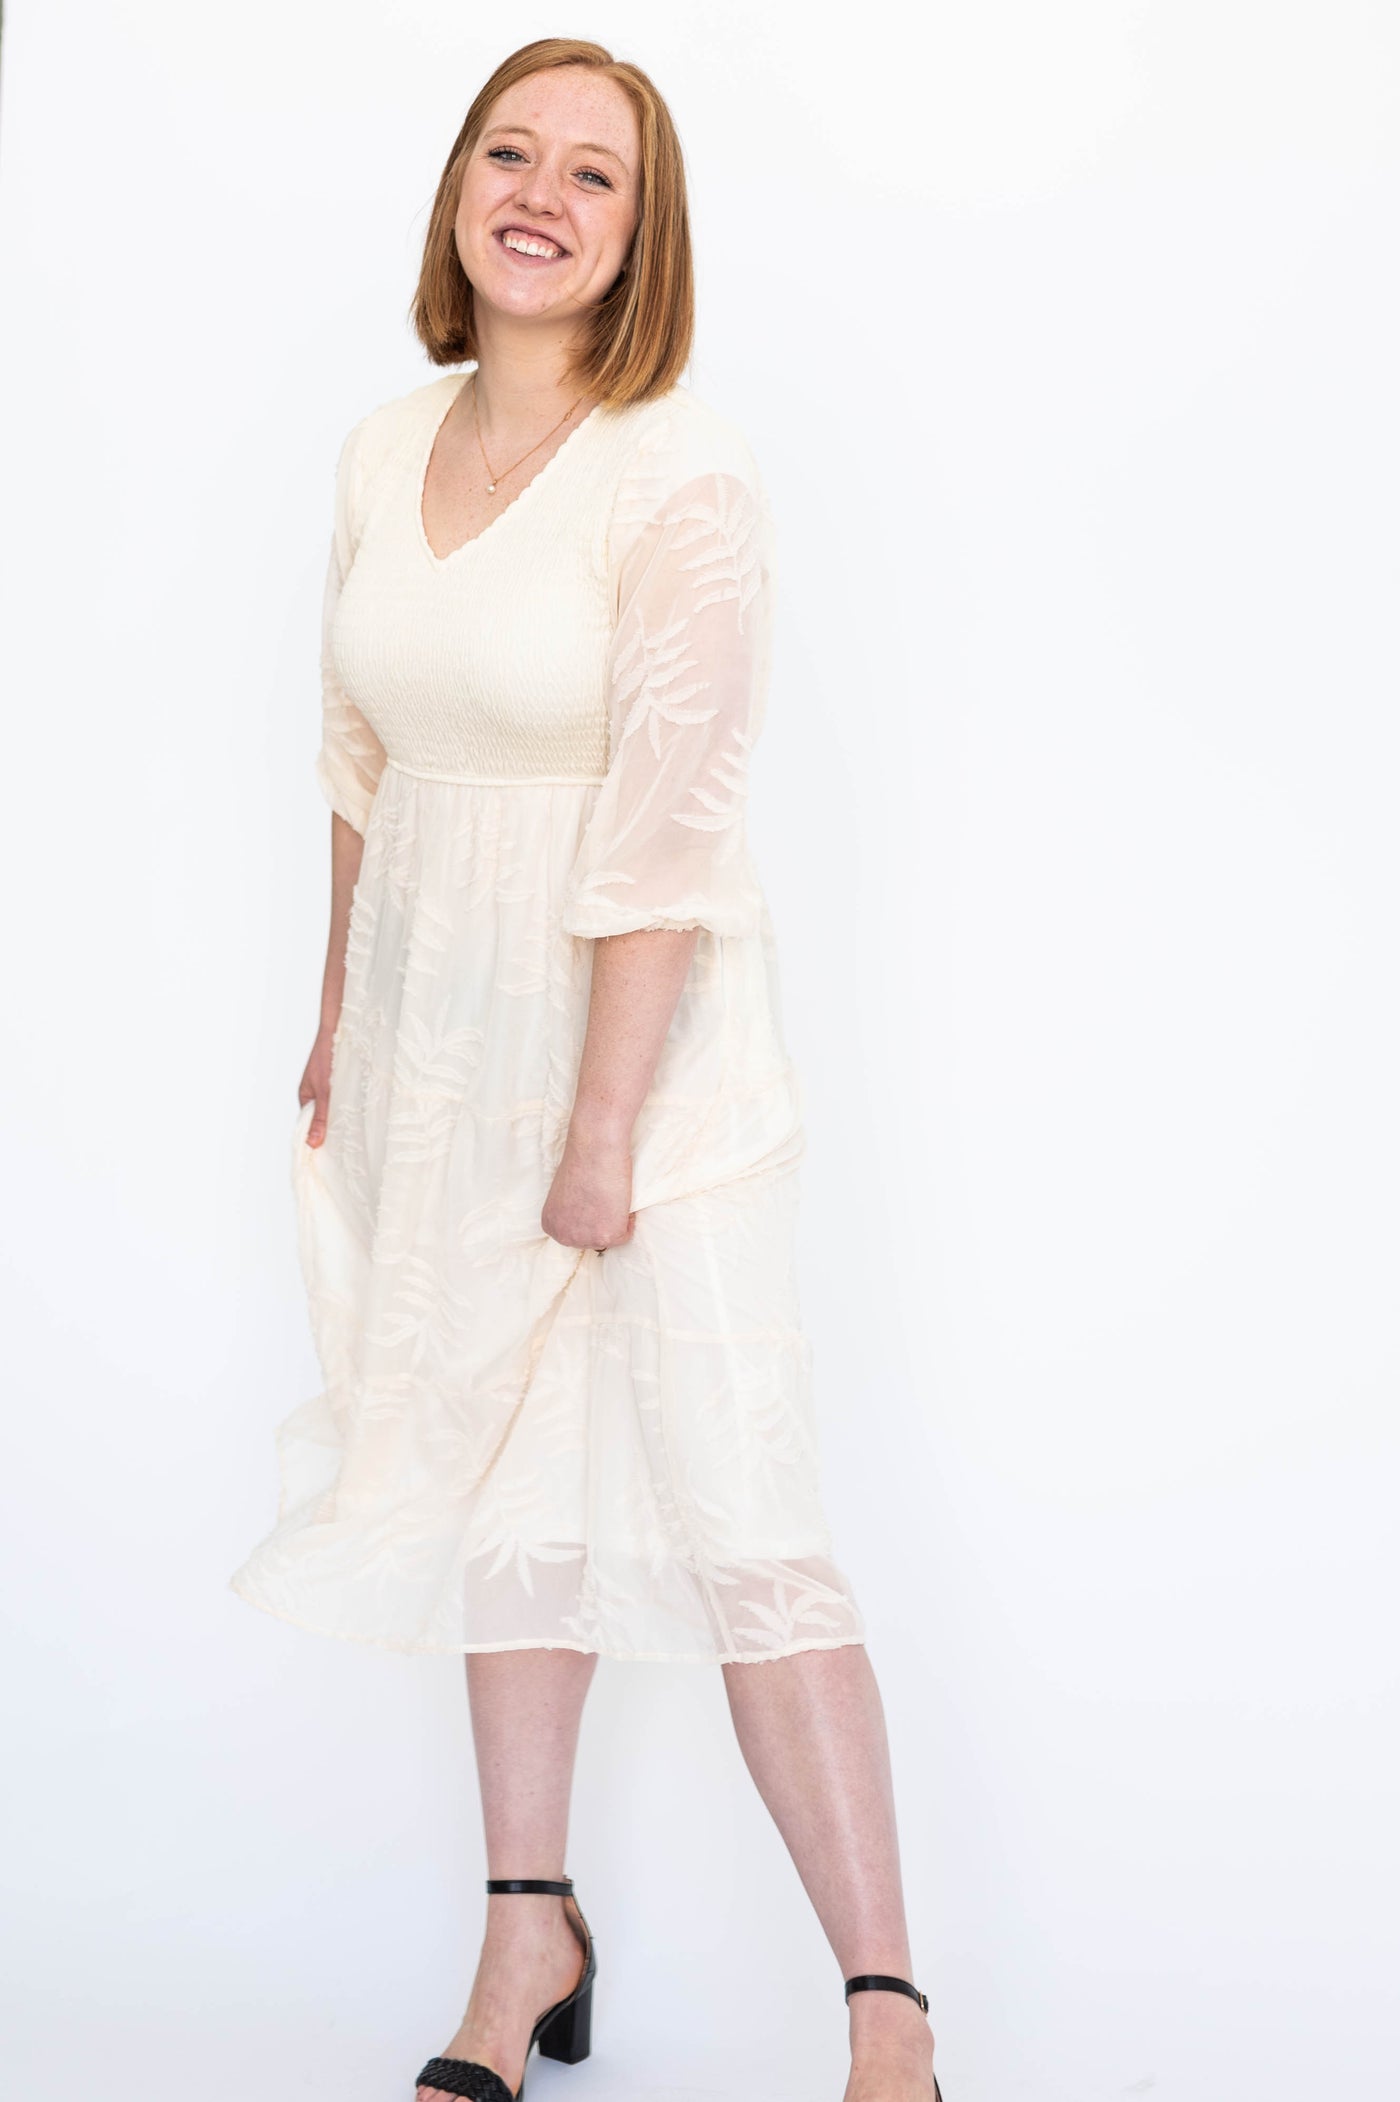 Short sleeve cream dress with sheer sleeves